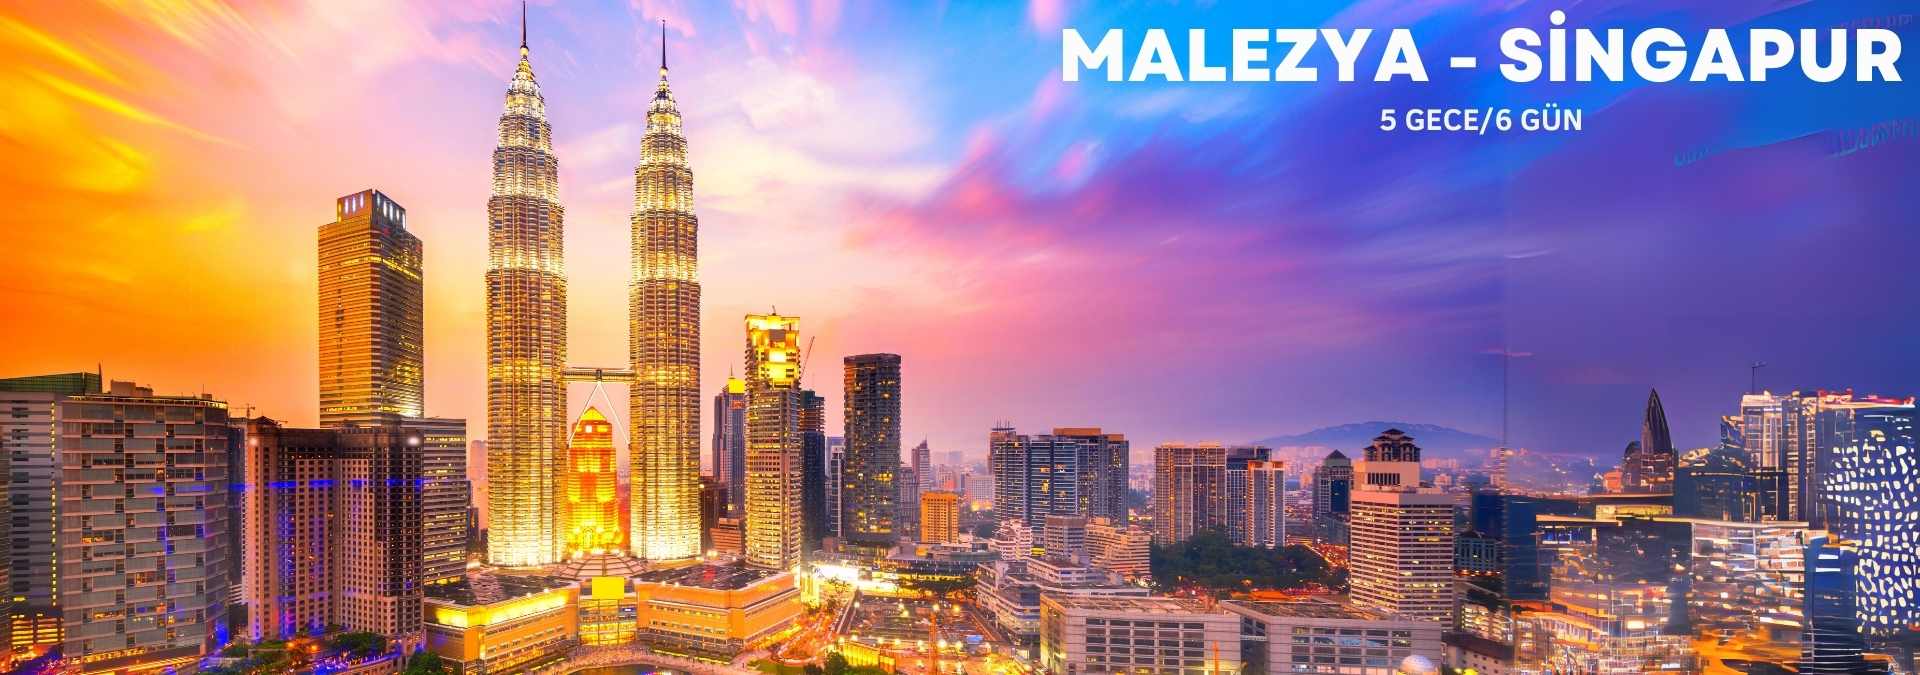 Malezya Singapur Turu Uzakdoğu 